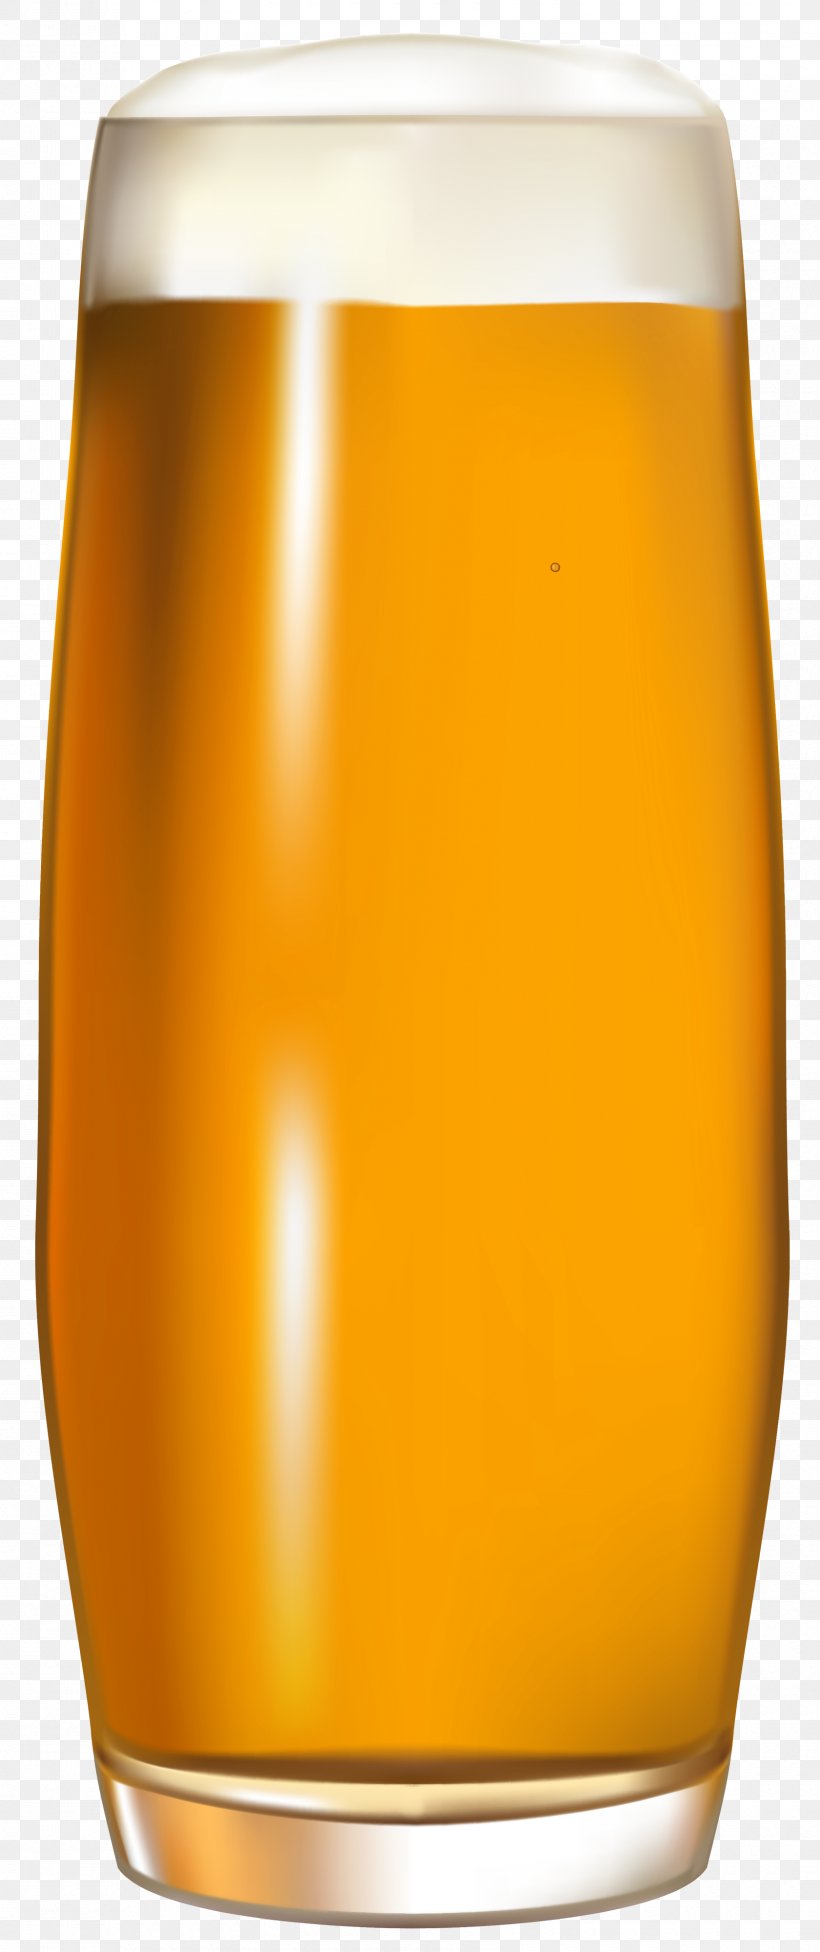 Beer Glasses Drink Clip Art, PNG, 1680x4000px, Beer, Alcoholic Drink, Beer Glass, Beer Glasses, Cocktail Glass Download Free